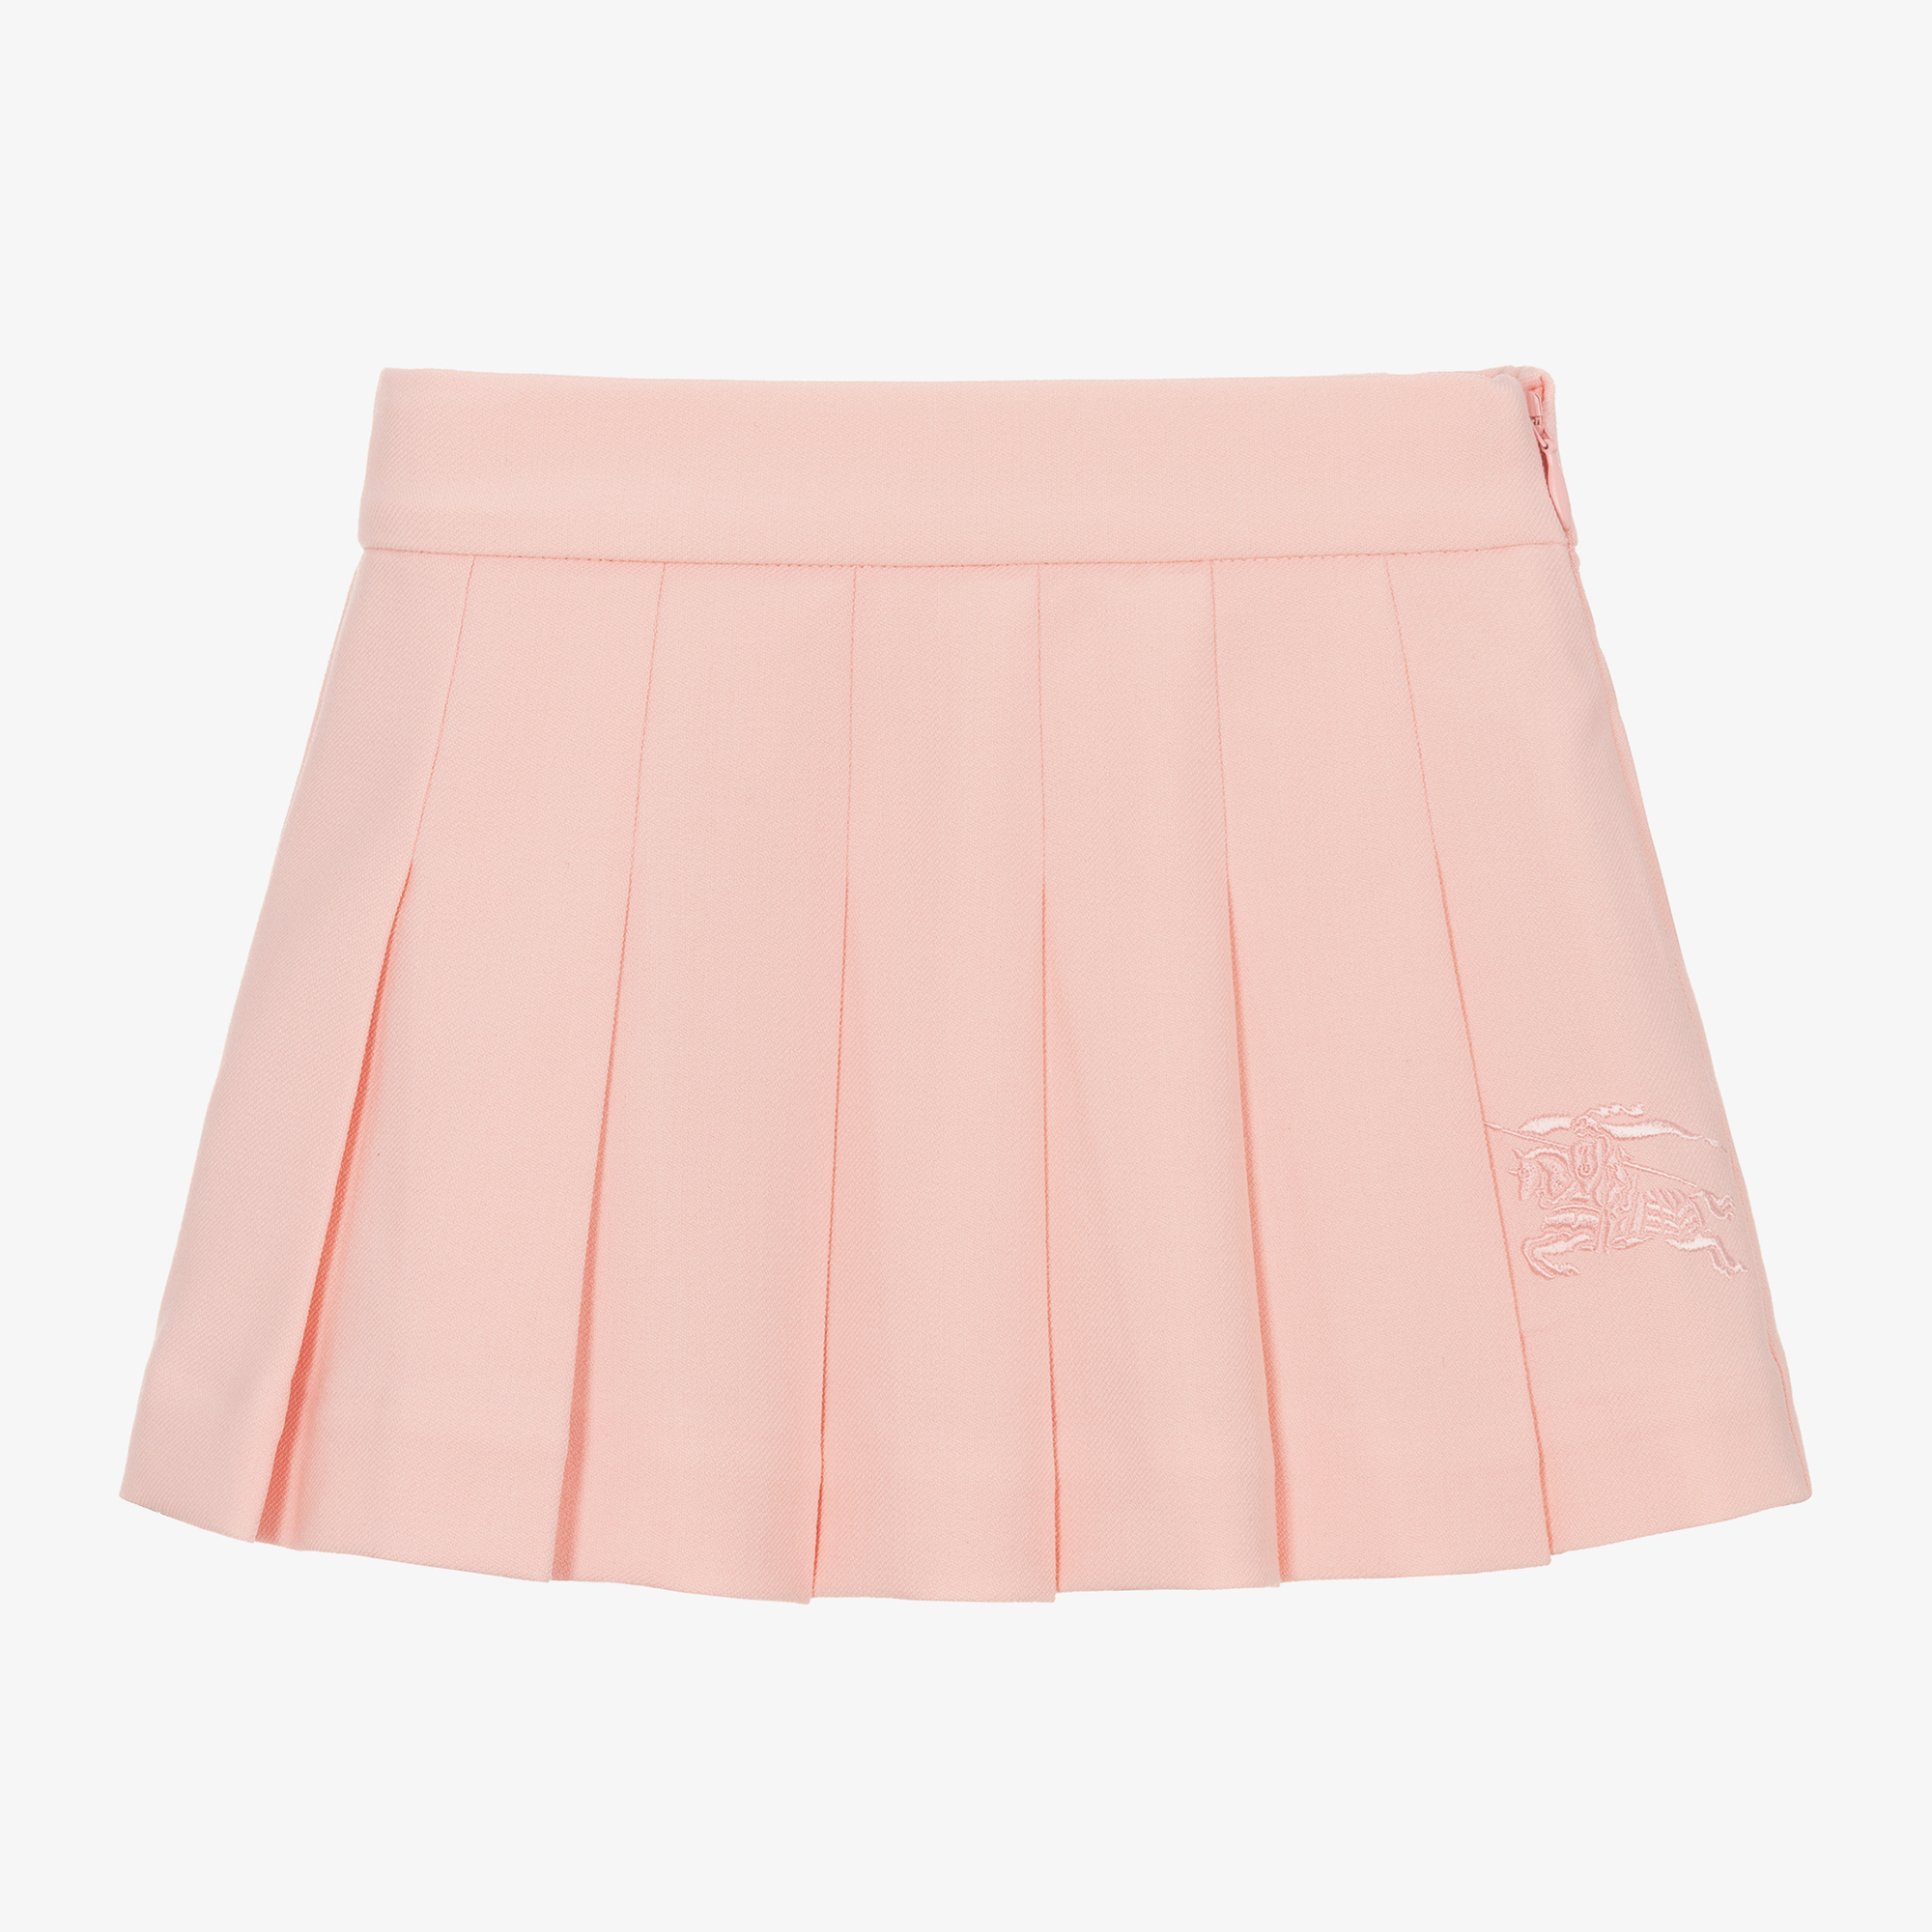 BURBERRY KIDS: skirt for girls - Grey | Burberry Kids skirt 8073510 online  at GIGLIO.COM